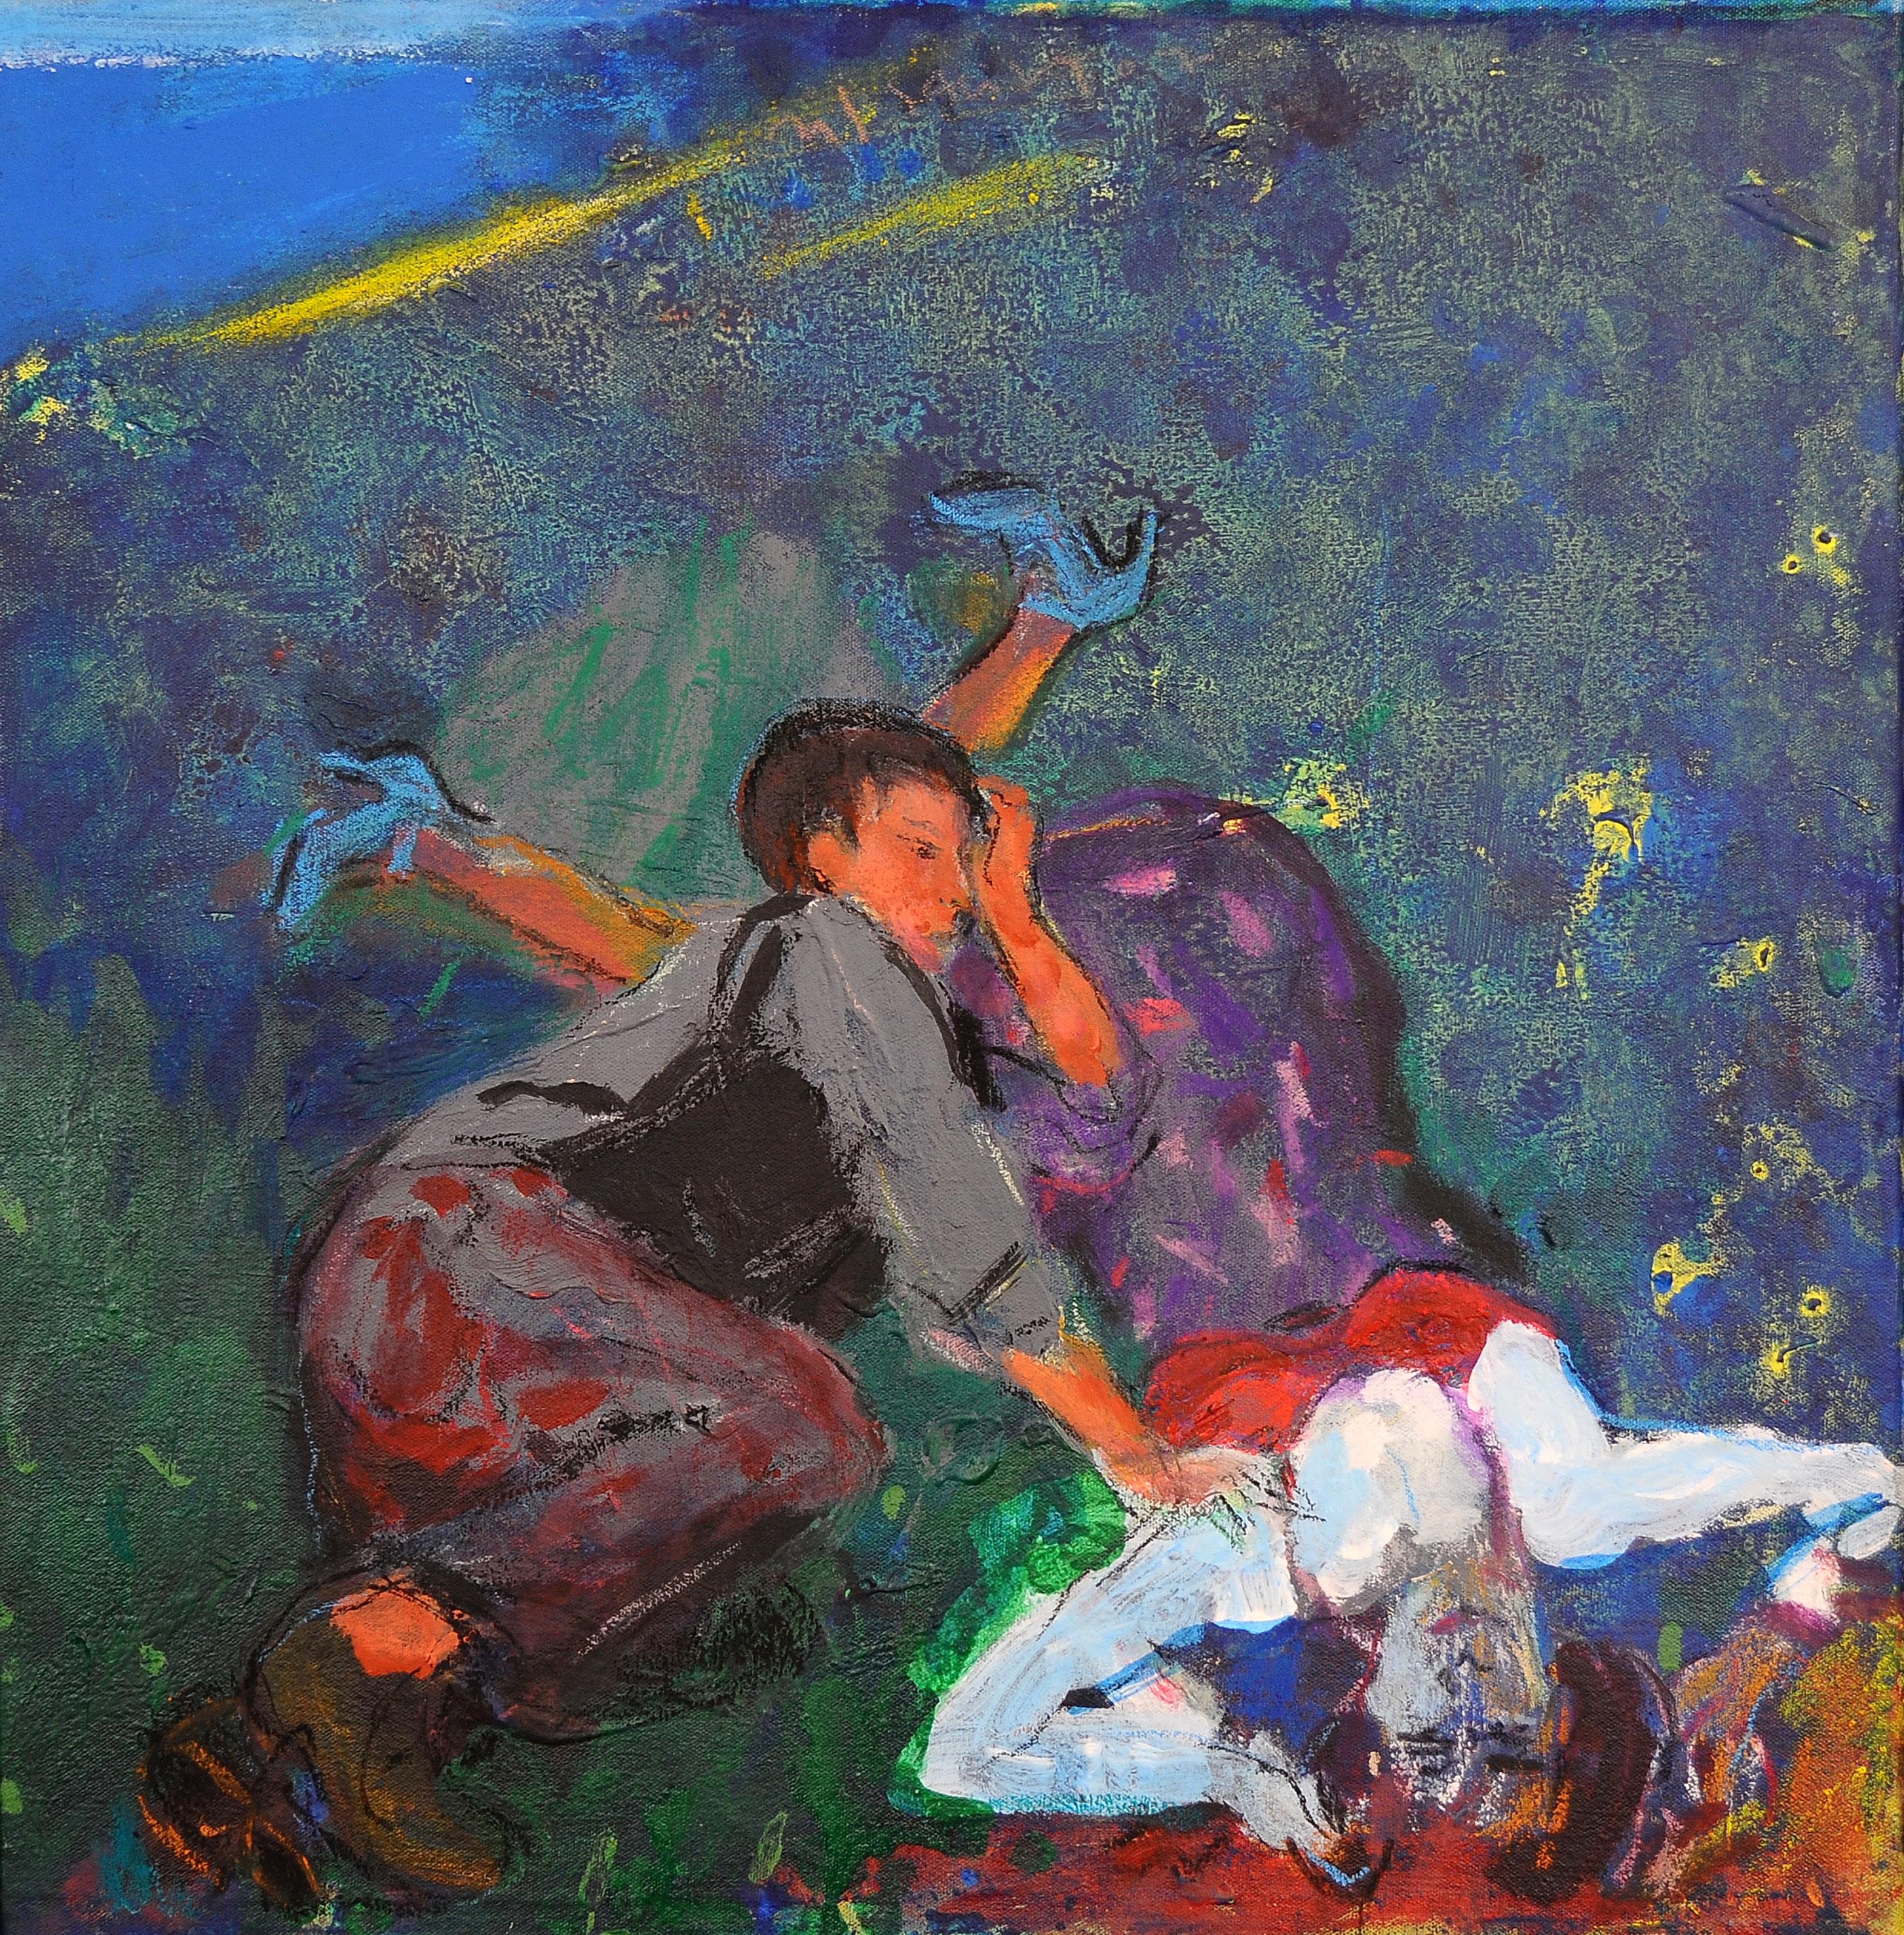 İsimsiz-Untitled, 2007, Tuval üzerine yağlıboya, Oil on canvas, 55x53 cm